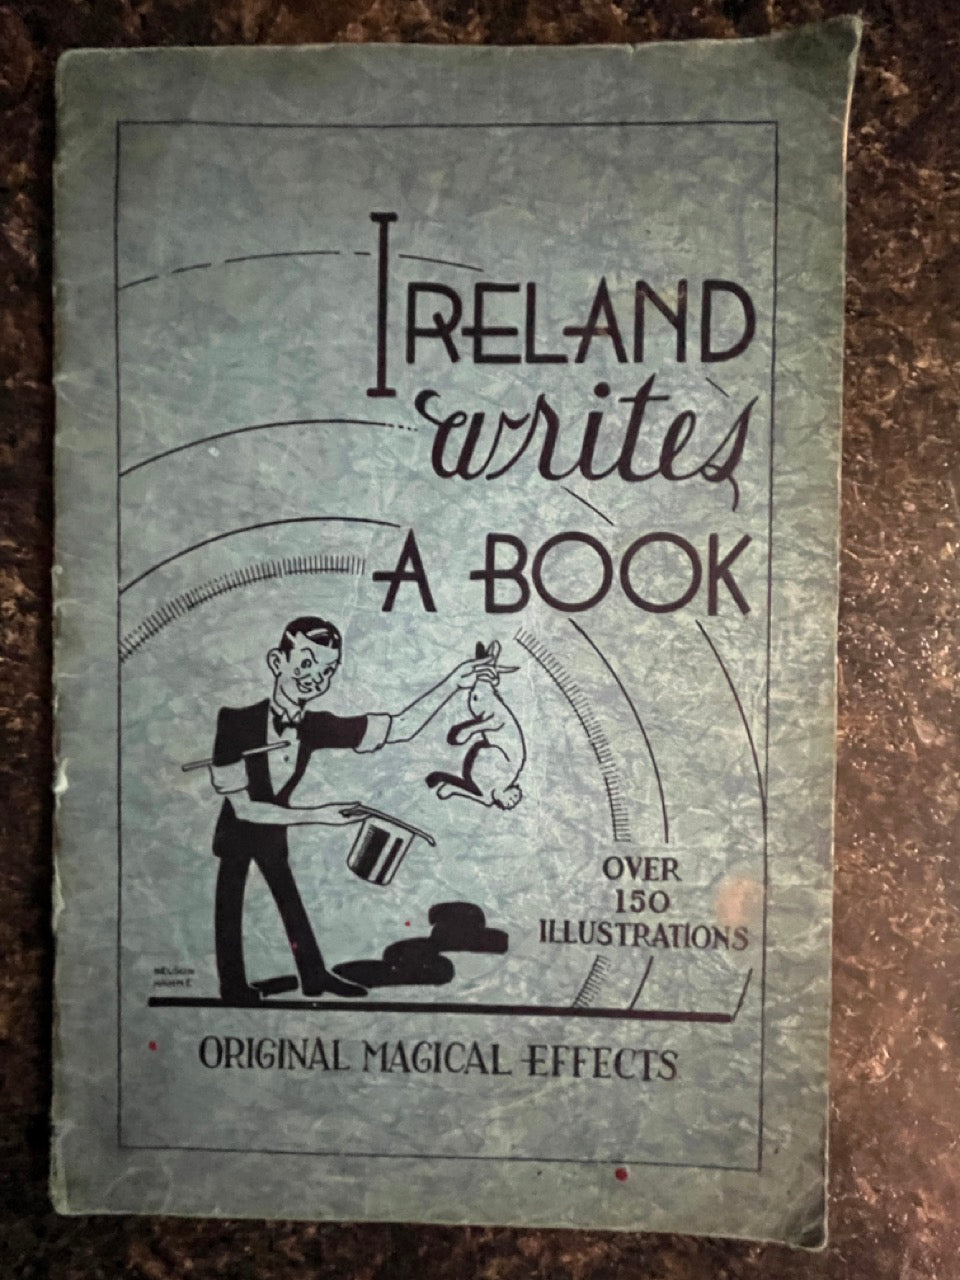 Ireland Writes A Book